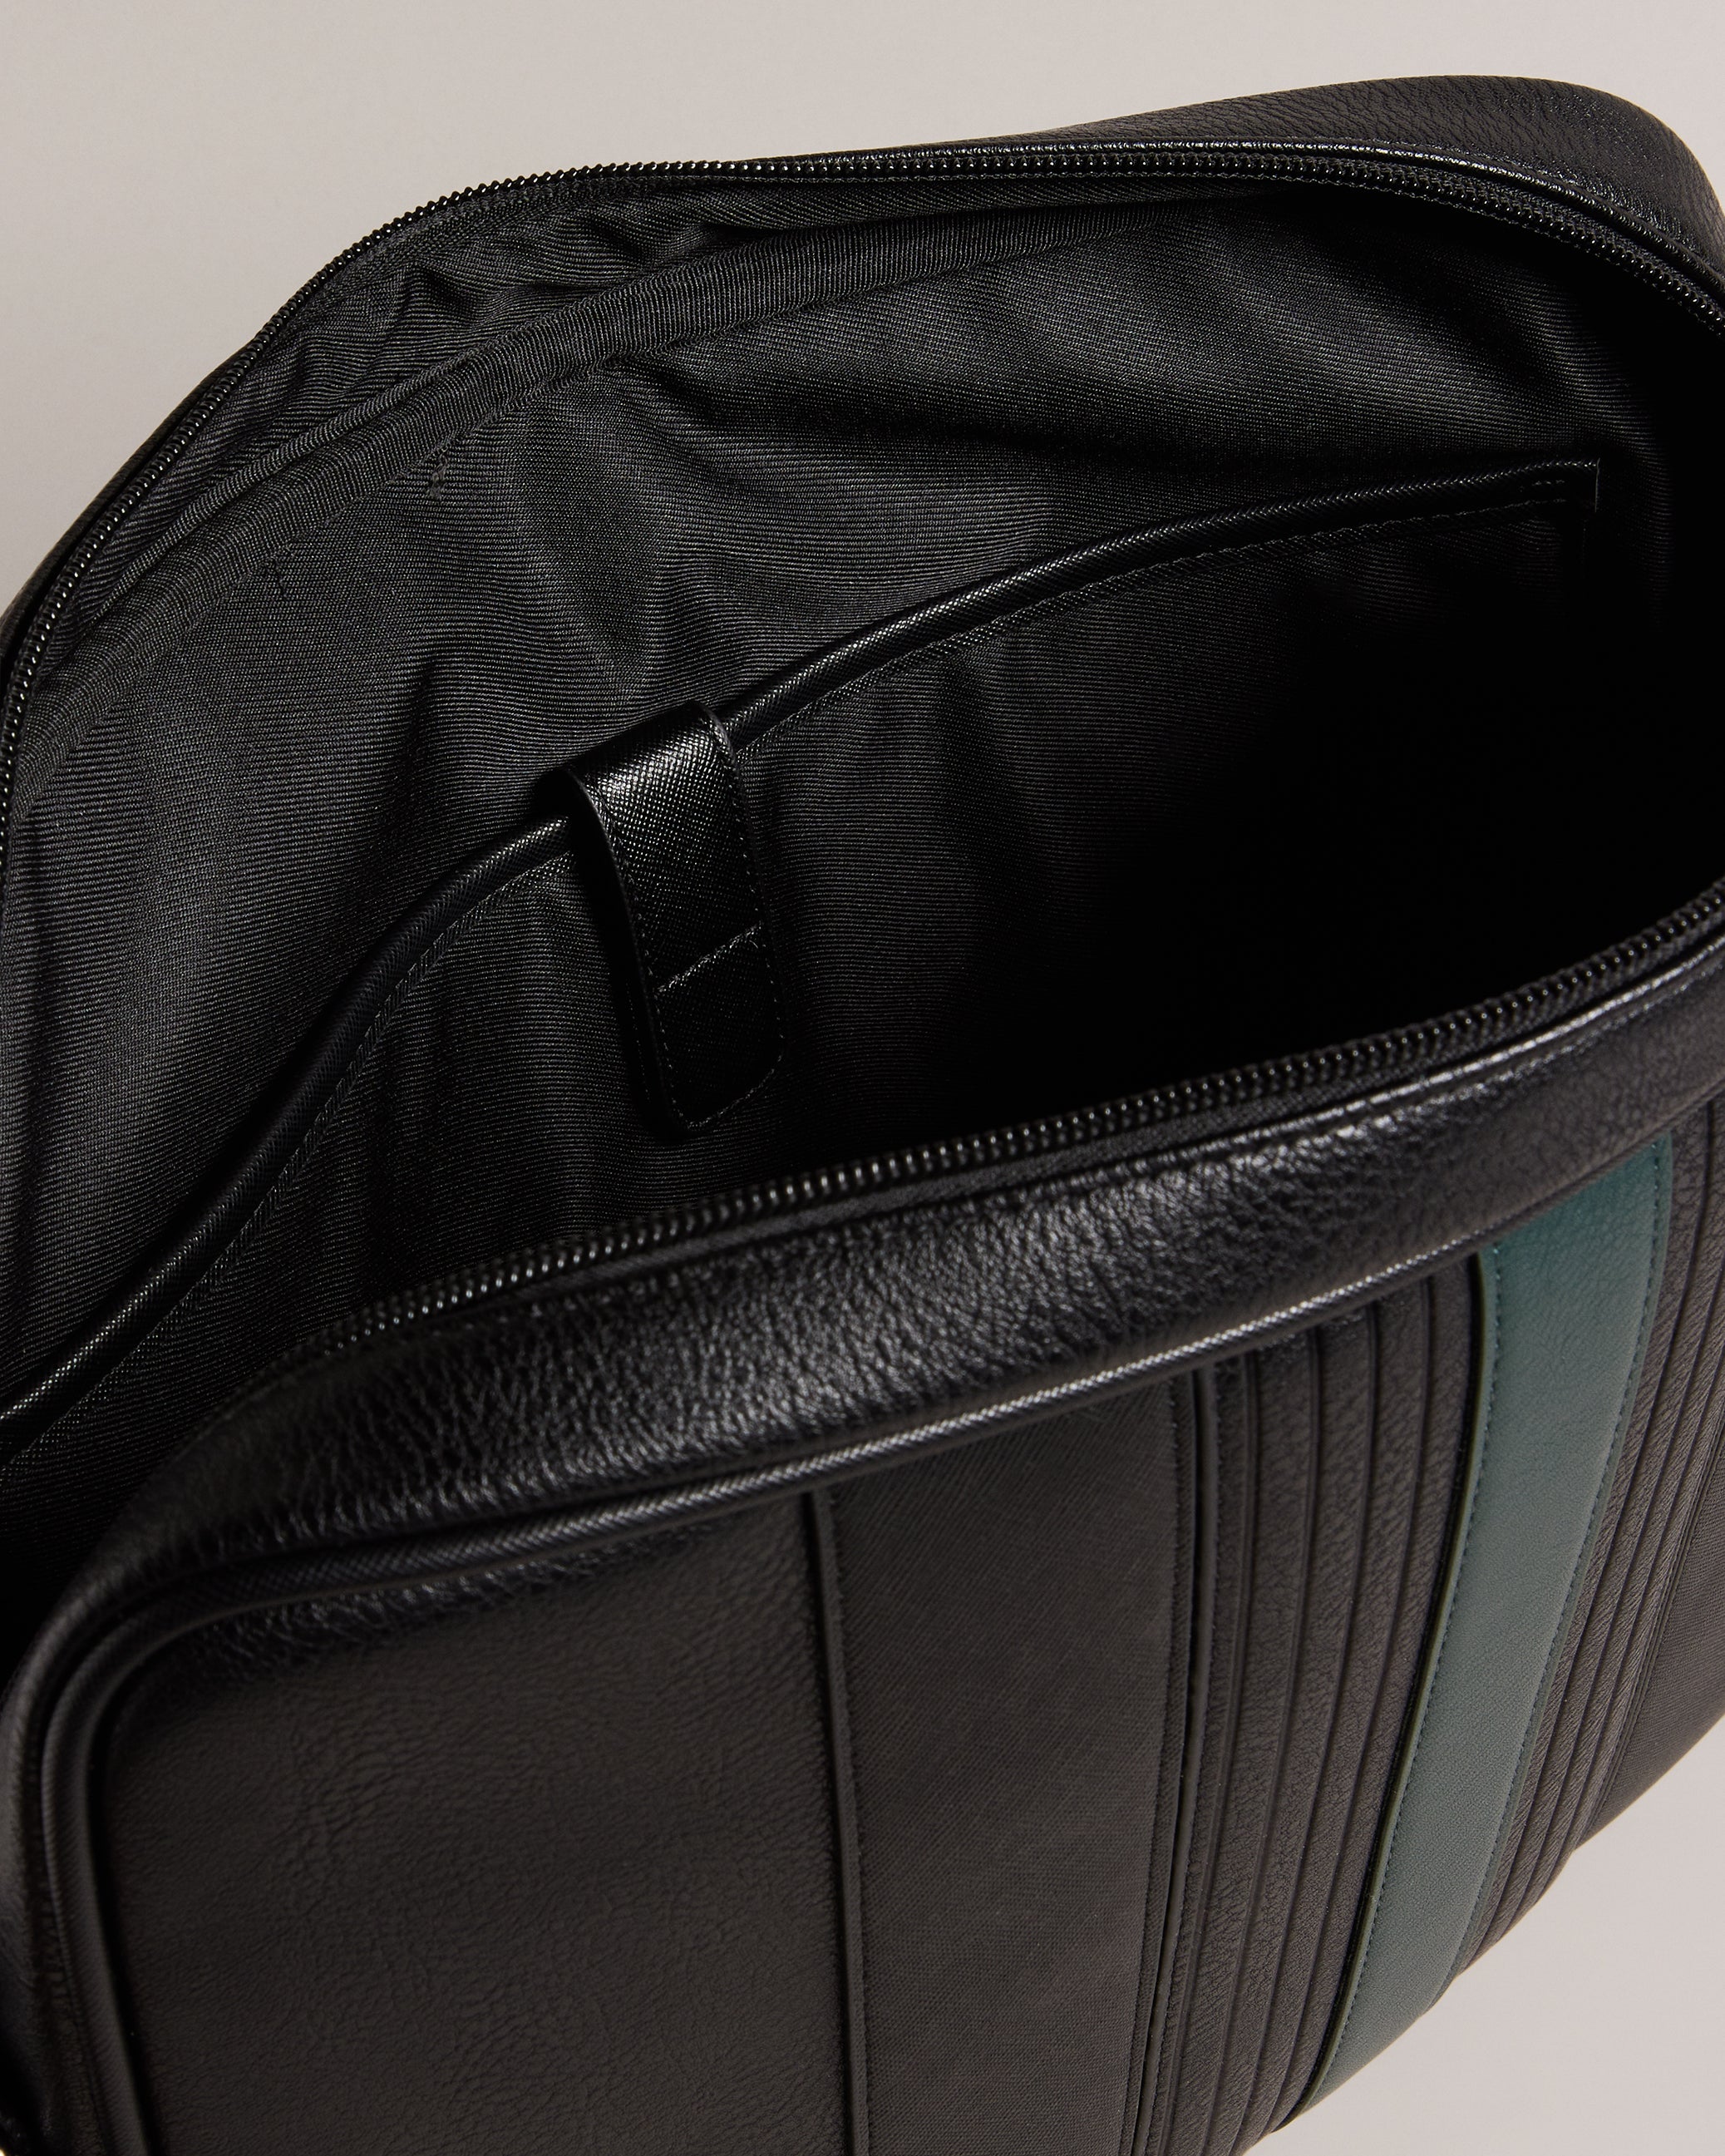 Evvan Striped Faux Leather Crossbody Bag Black